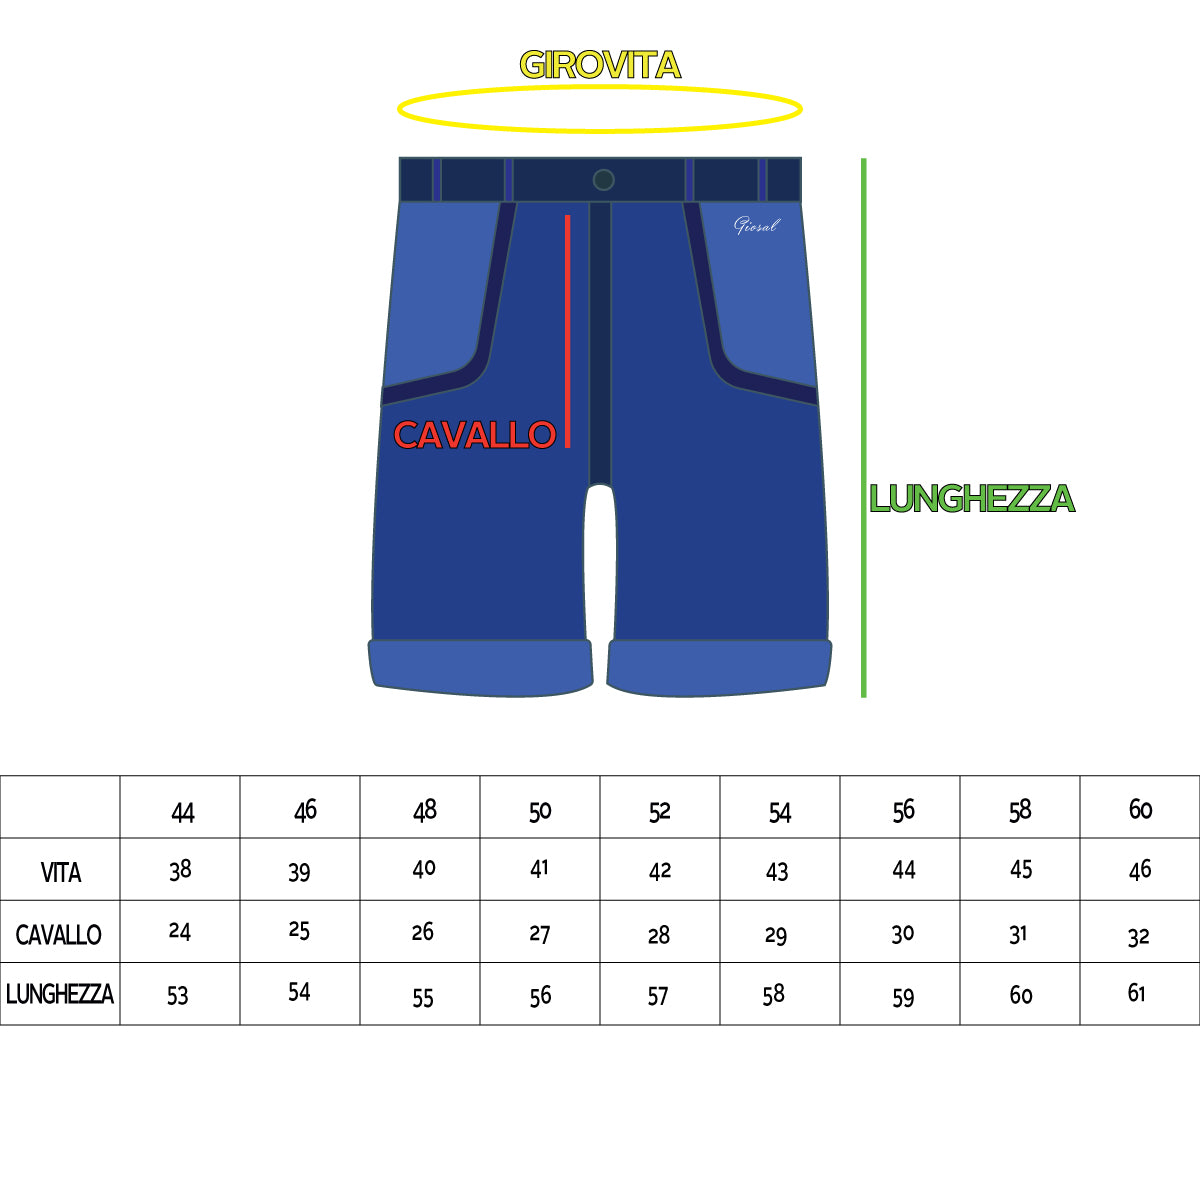 Bermuda Pantaloncino Uomo Denim Scuro Jeans Slim Fit Cinque Tasche Basic GIOSAL-PC1576A